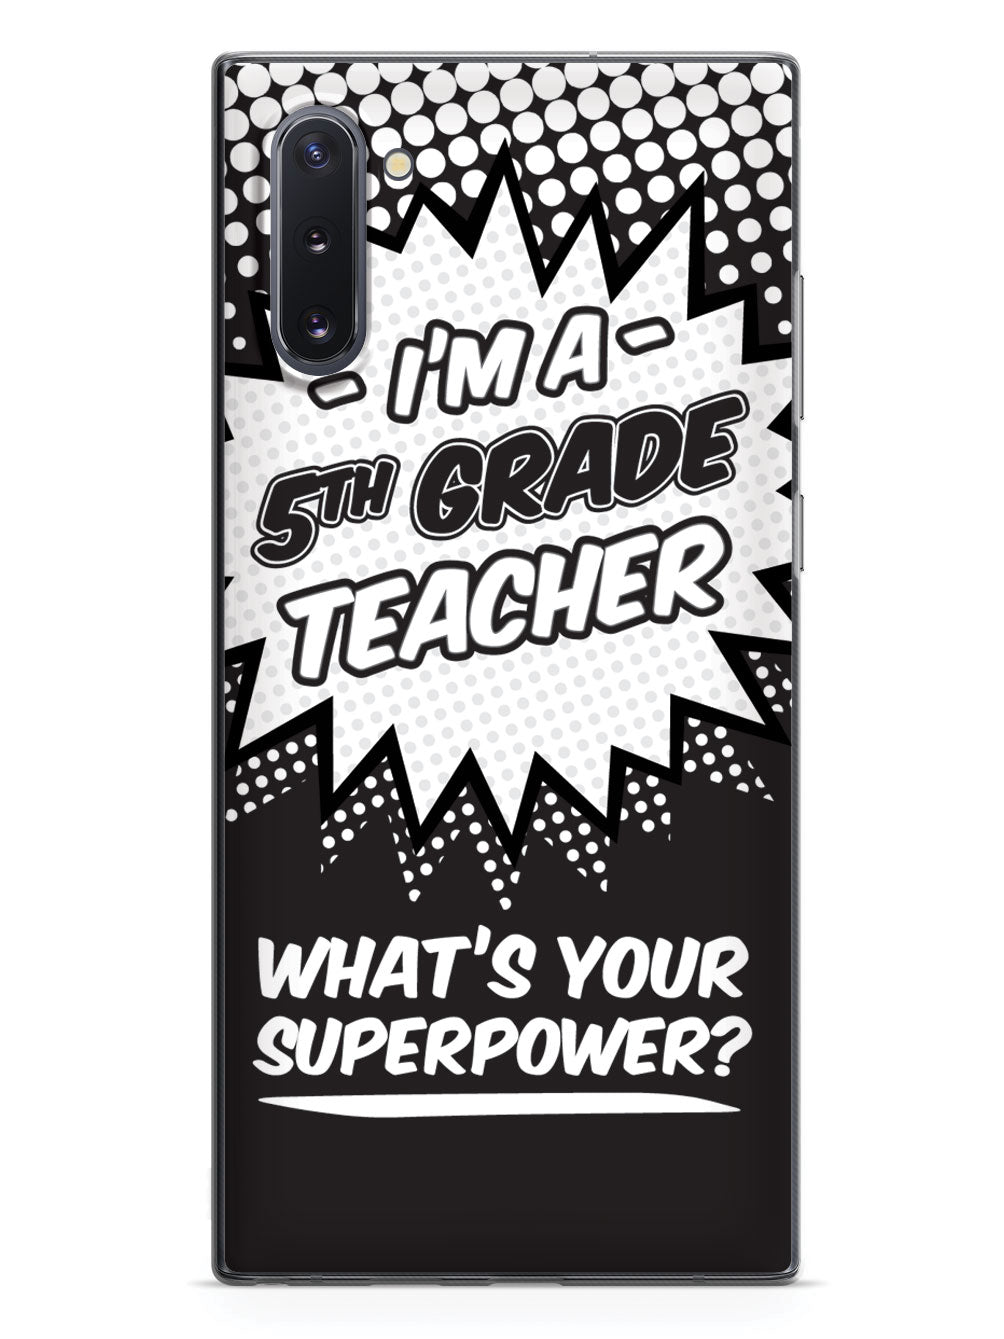 5th Grade Teacher - What's Your Superpower? Case